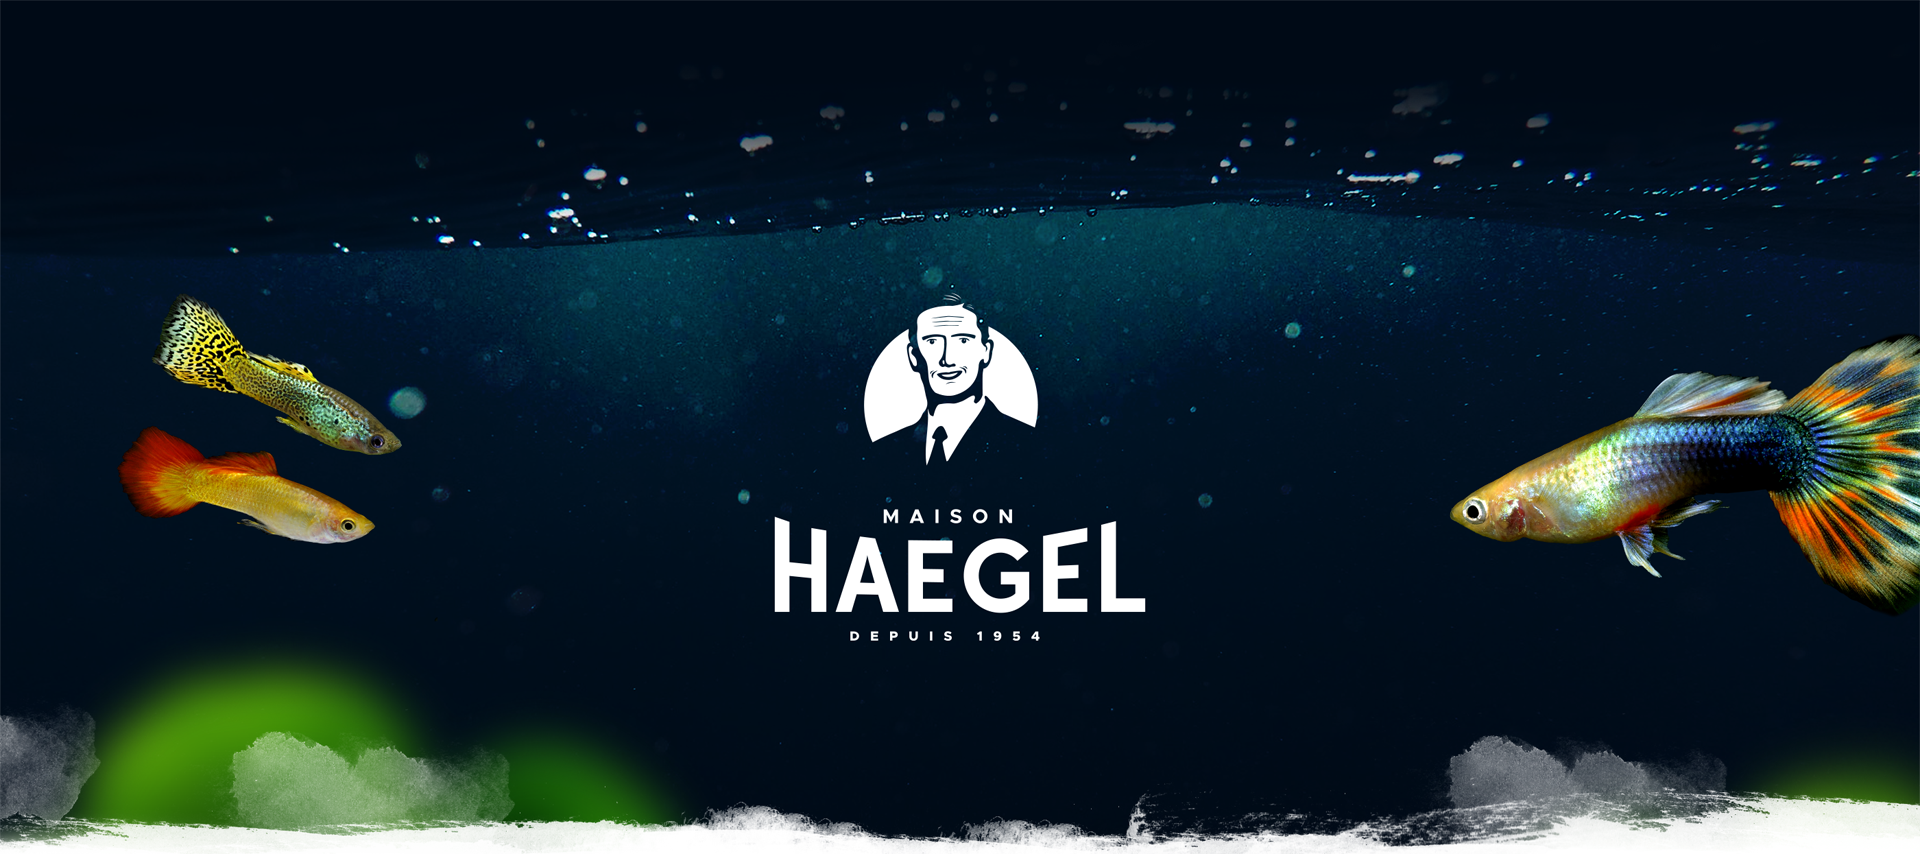 Maison Haegel